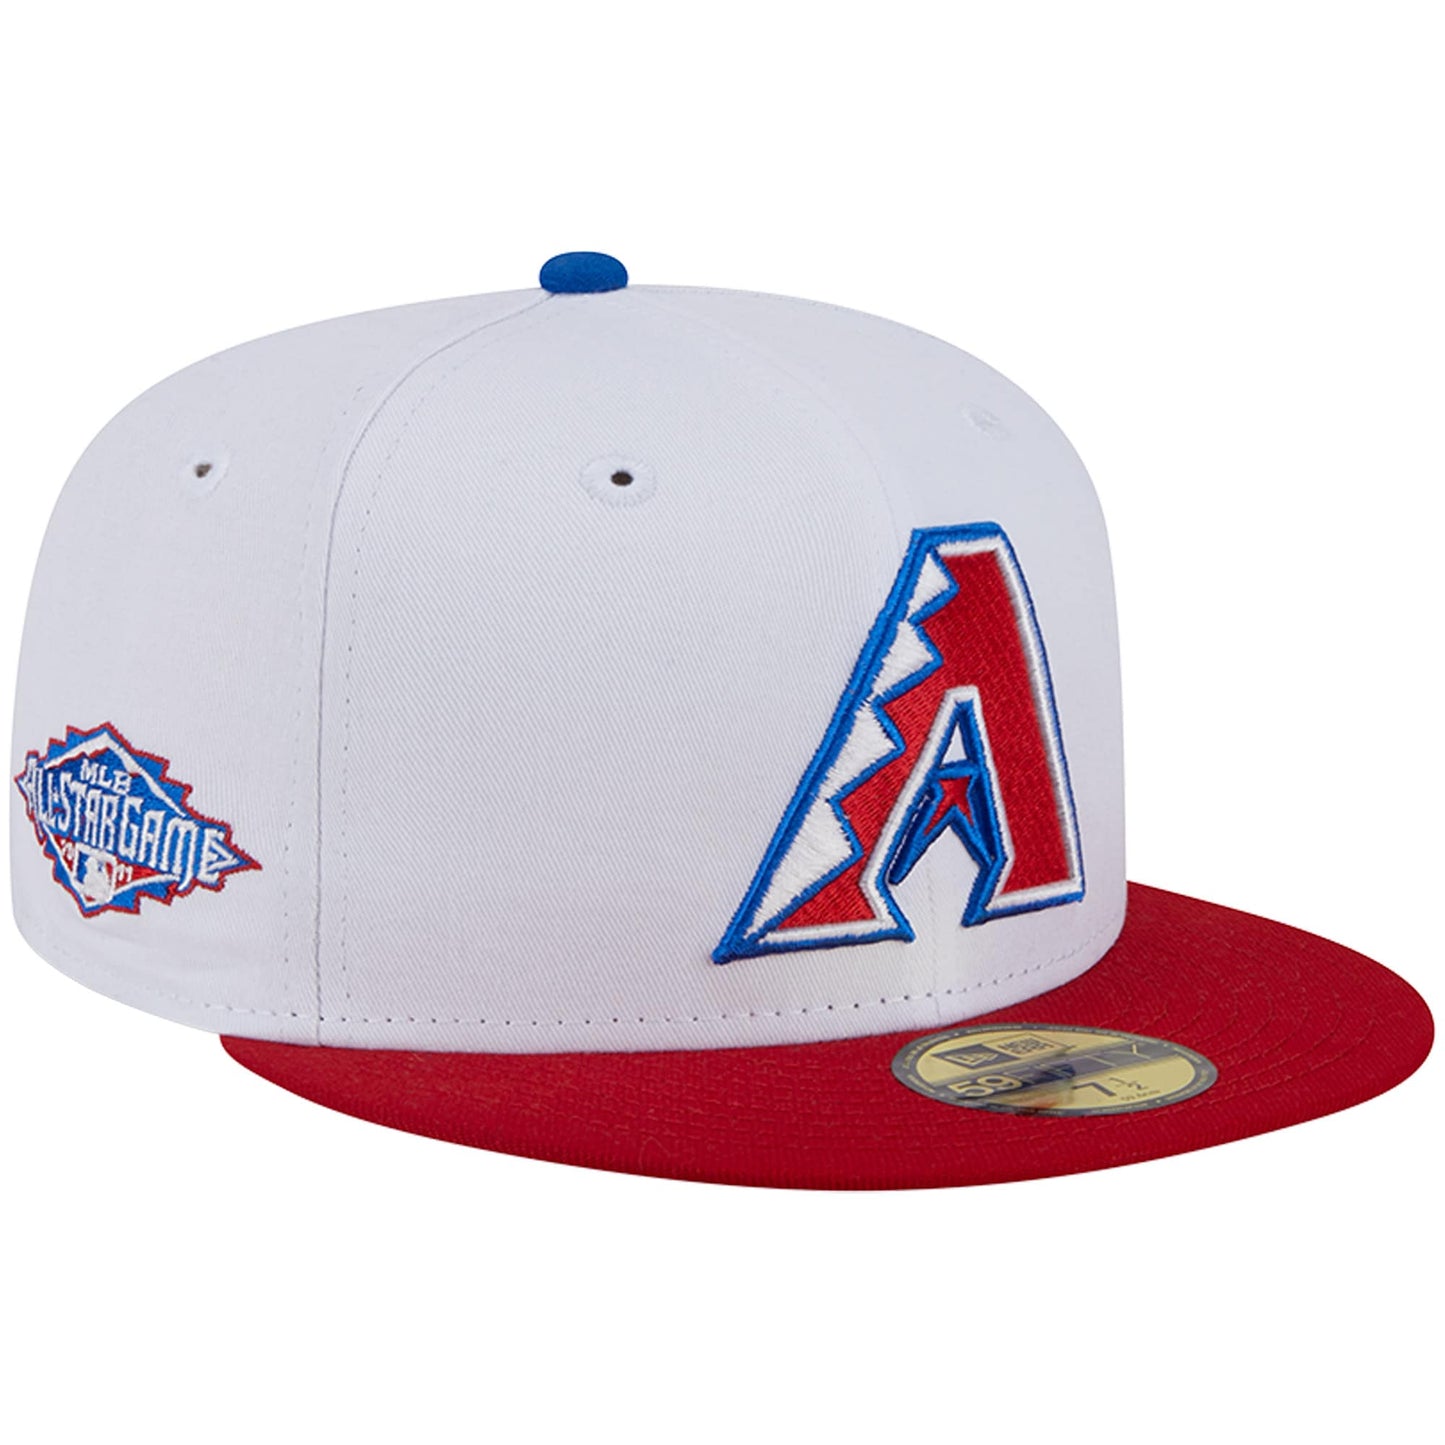 Arizona Diamondbacks New Era Undervisor 59FIFTY Fitted Hat - White/Red